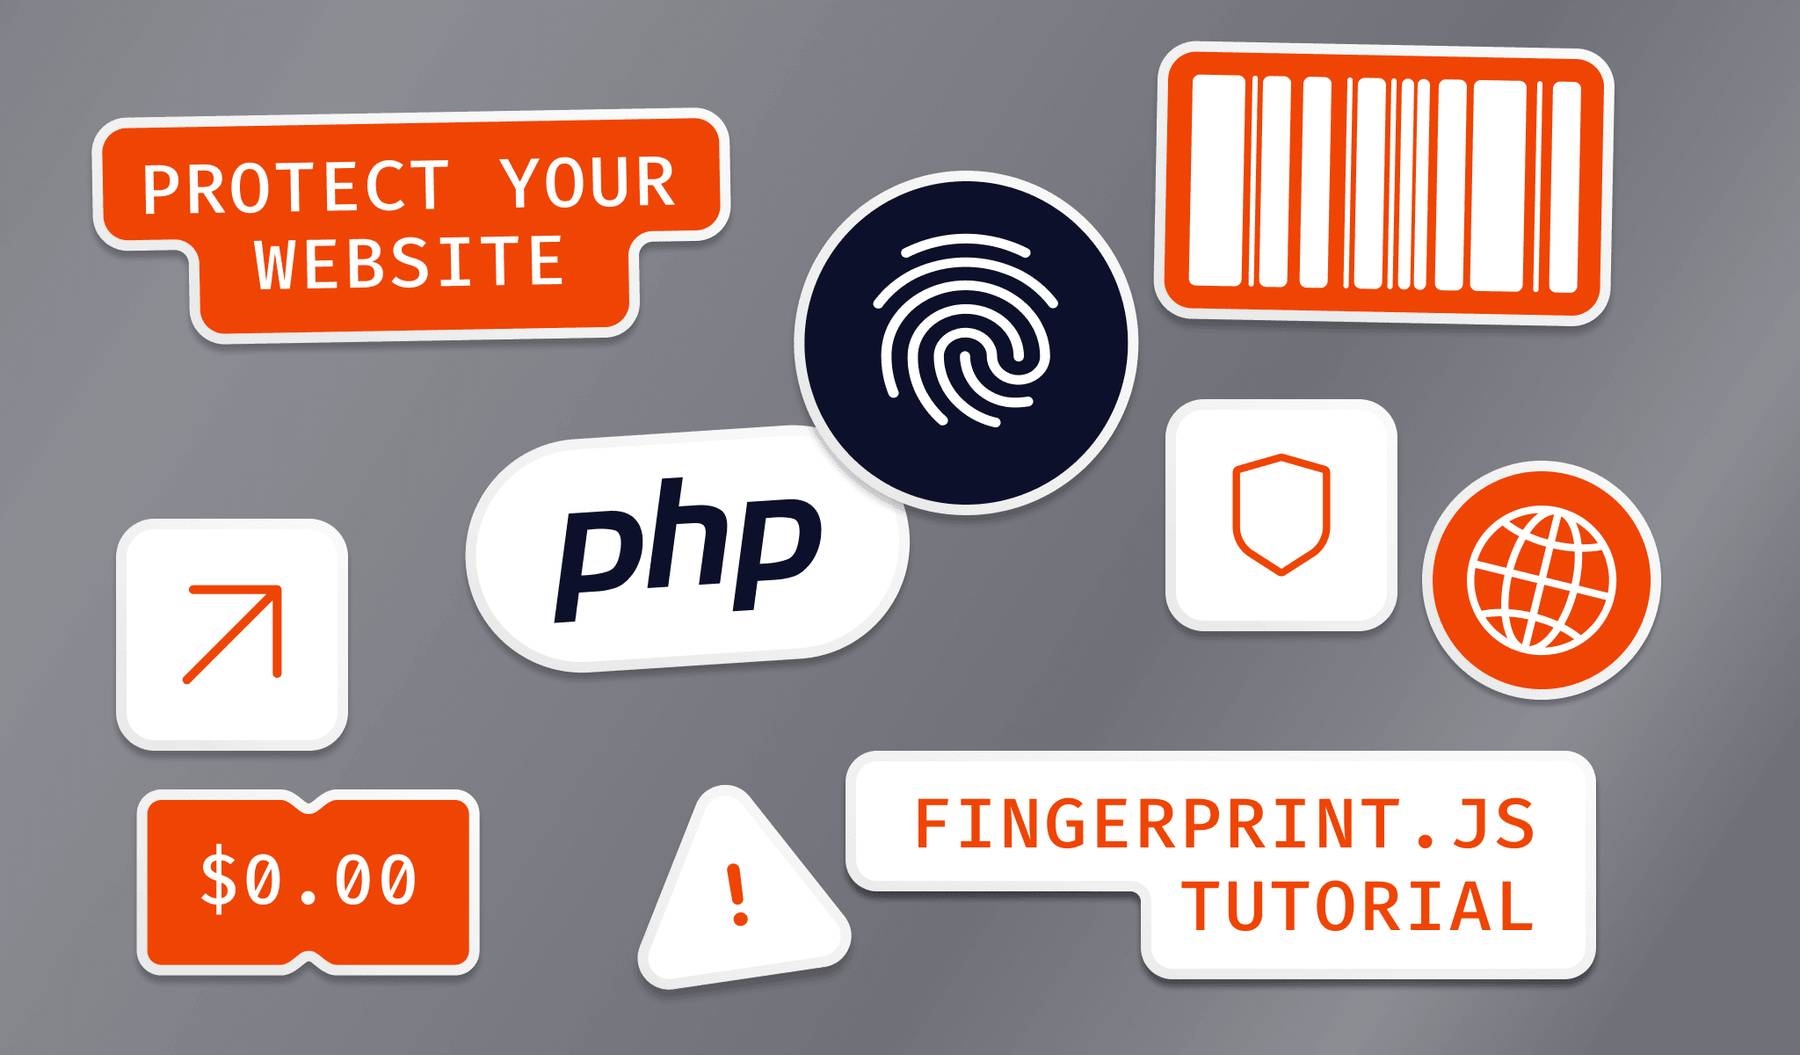 Browser fingerprinting in PHP